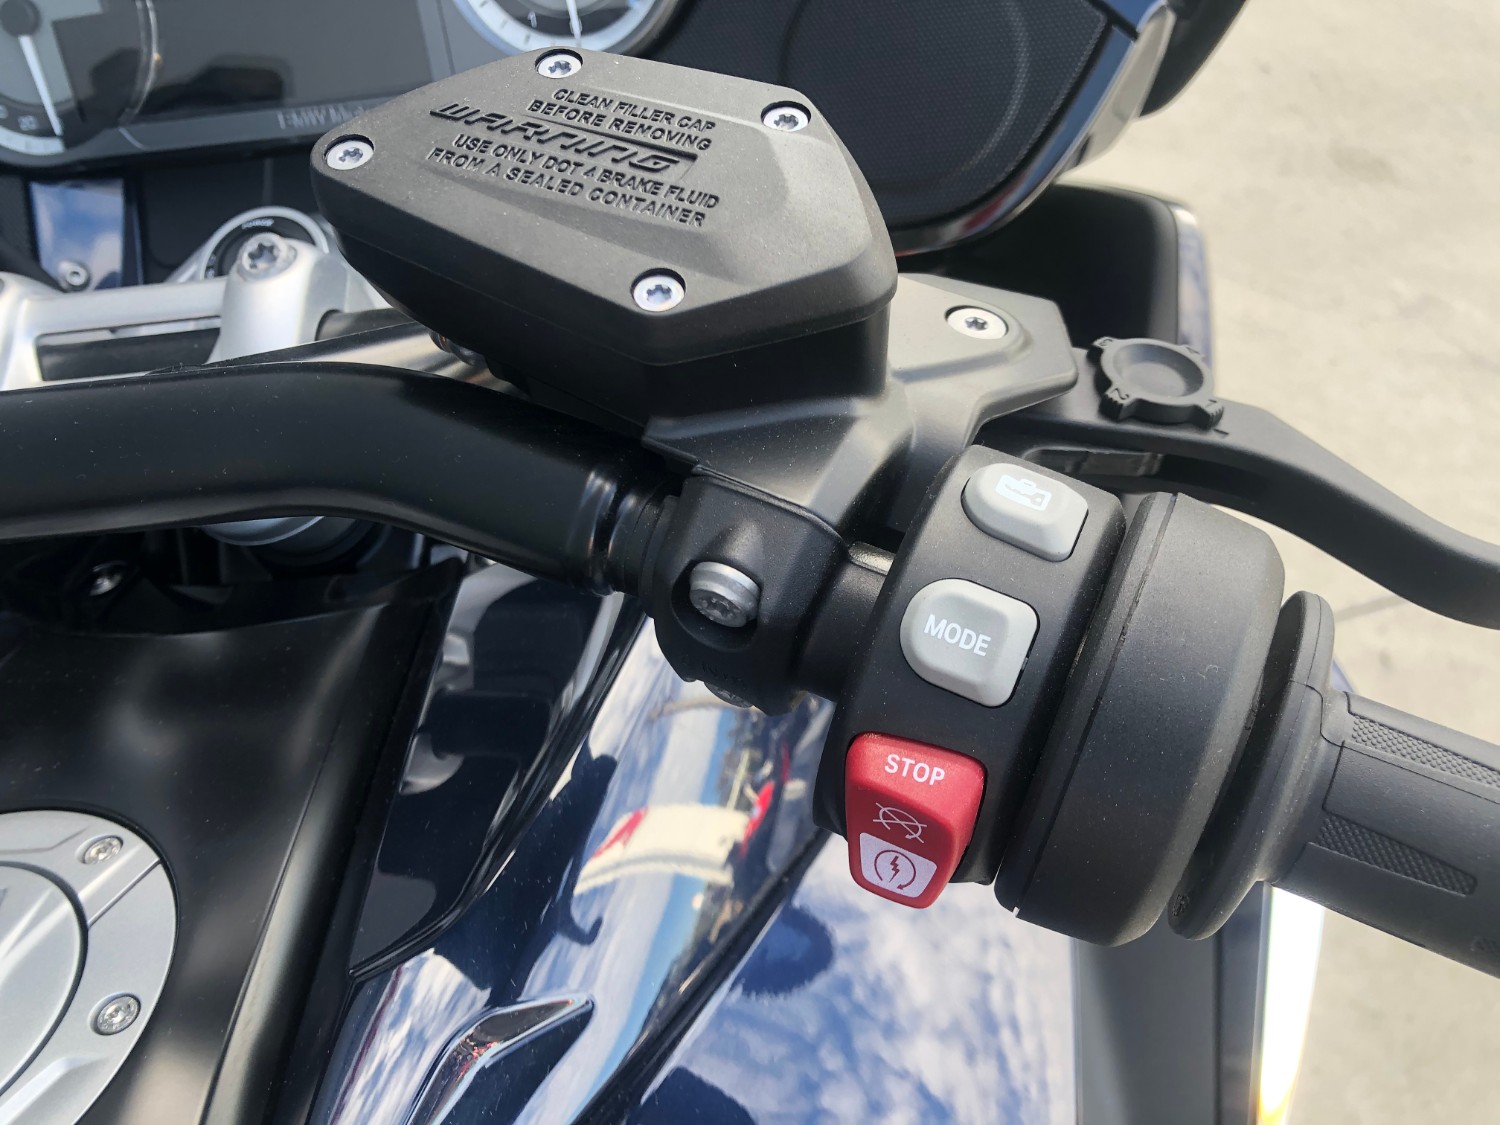 2019 BMW K1600 B Deluxe Motorcycle Image 31